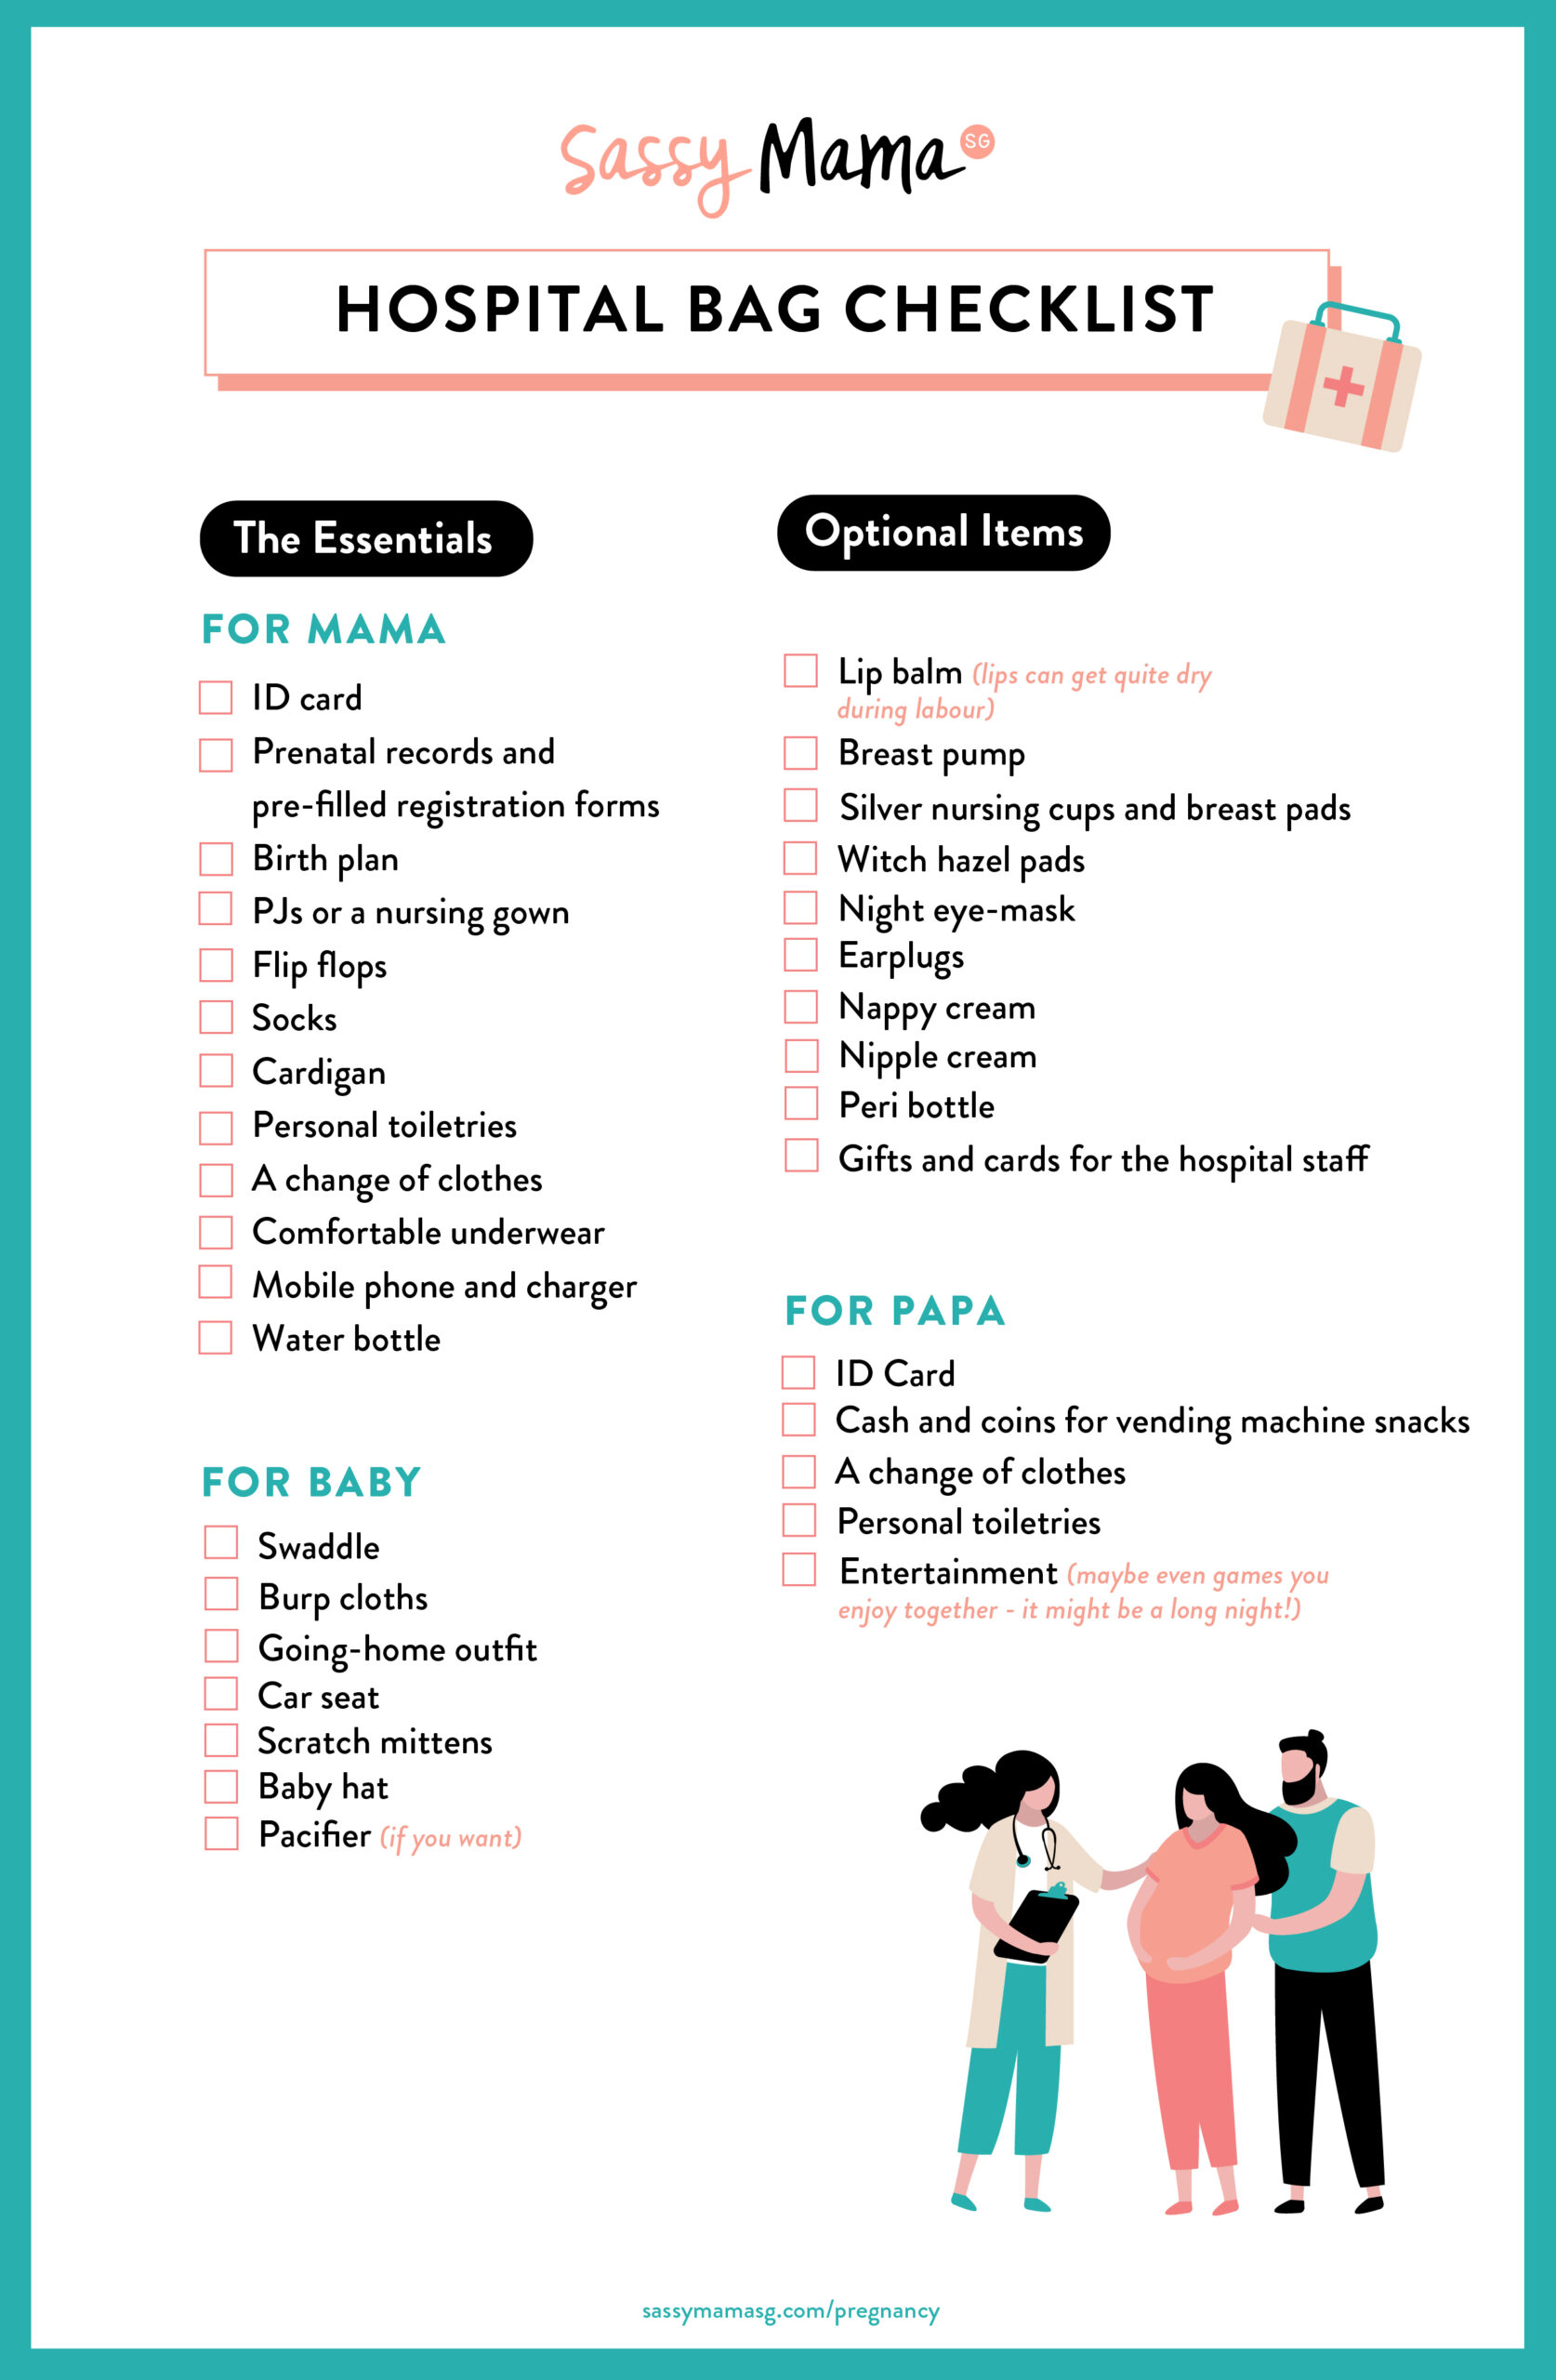 Sassy Mama SG Hospital Bag Checklist